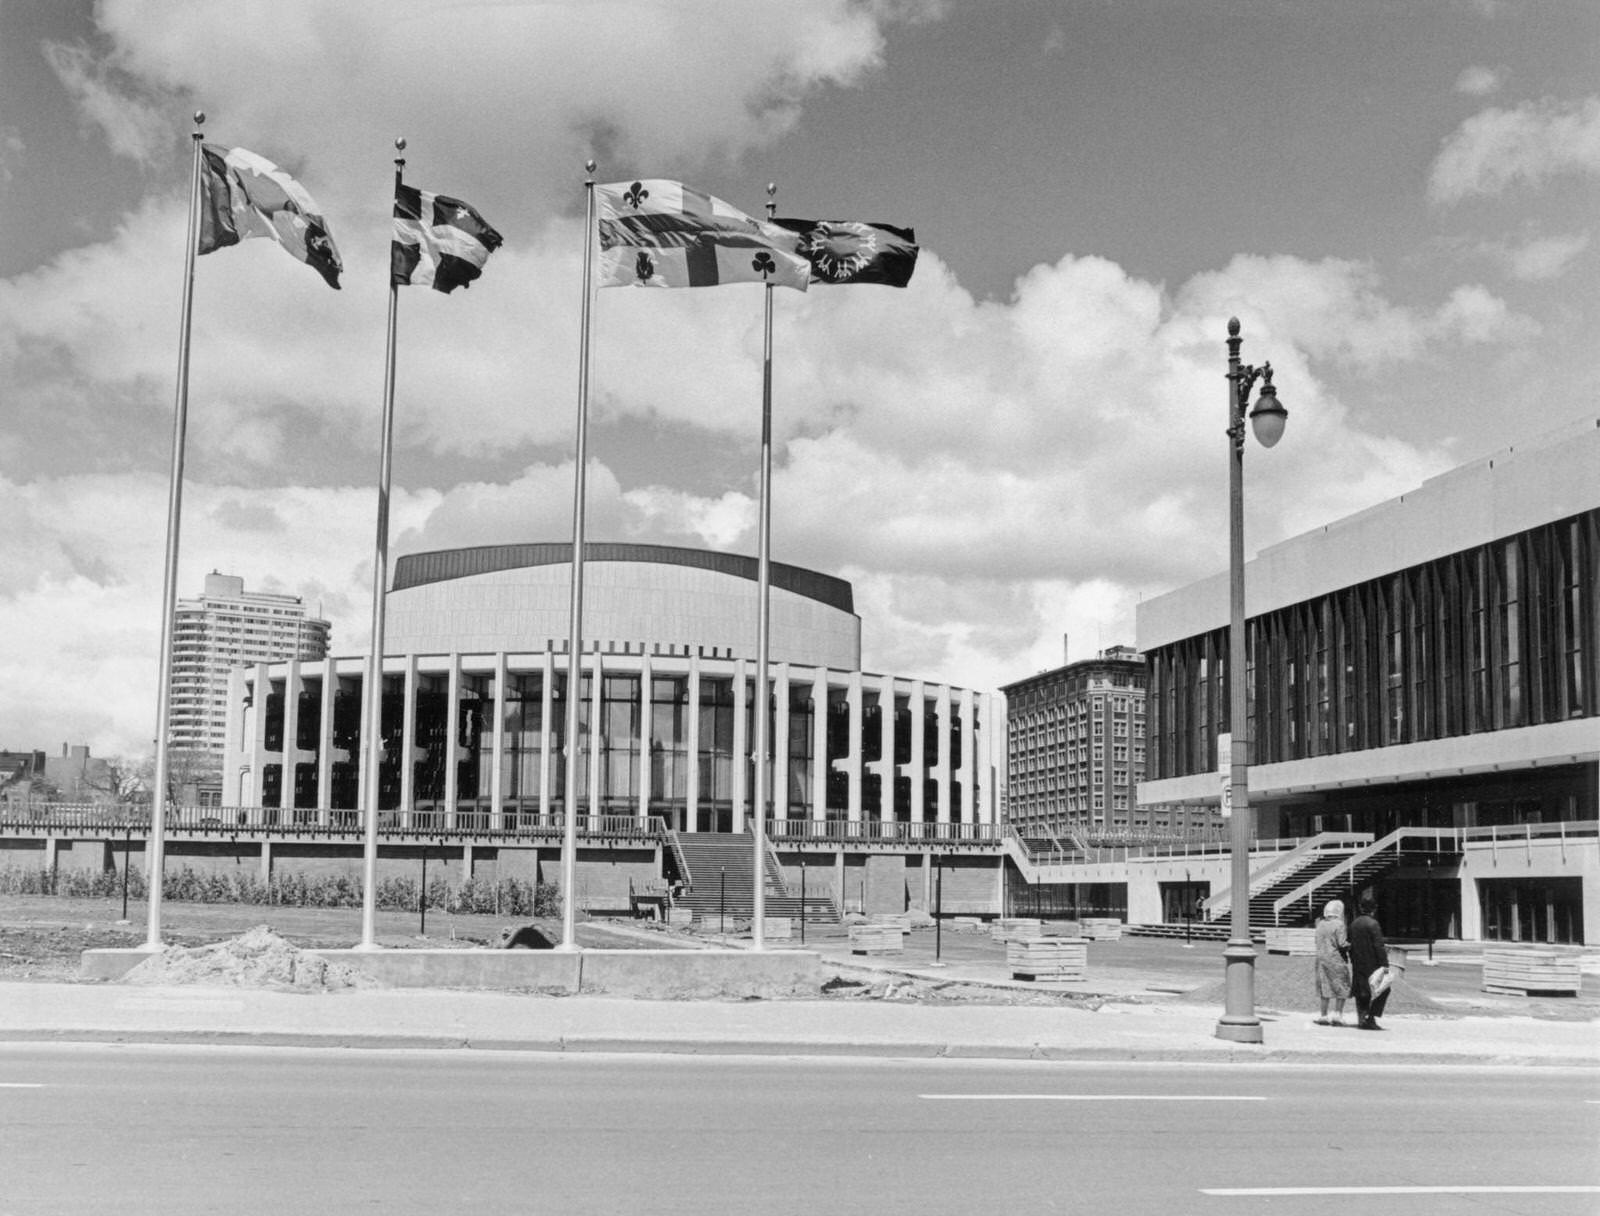 City Theater, Montreal, 1960s